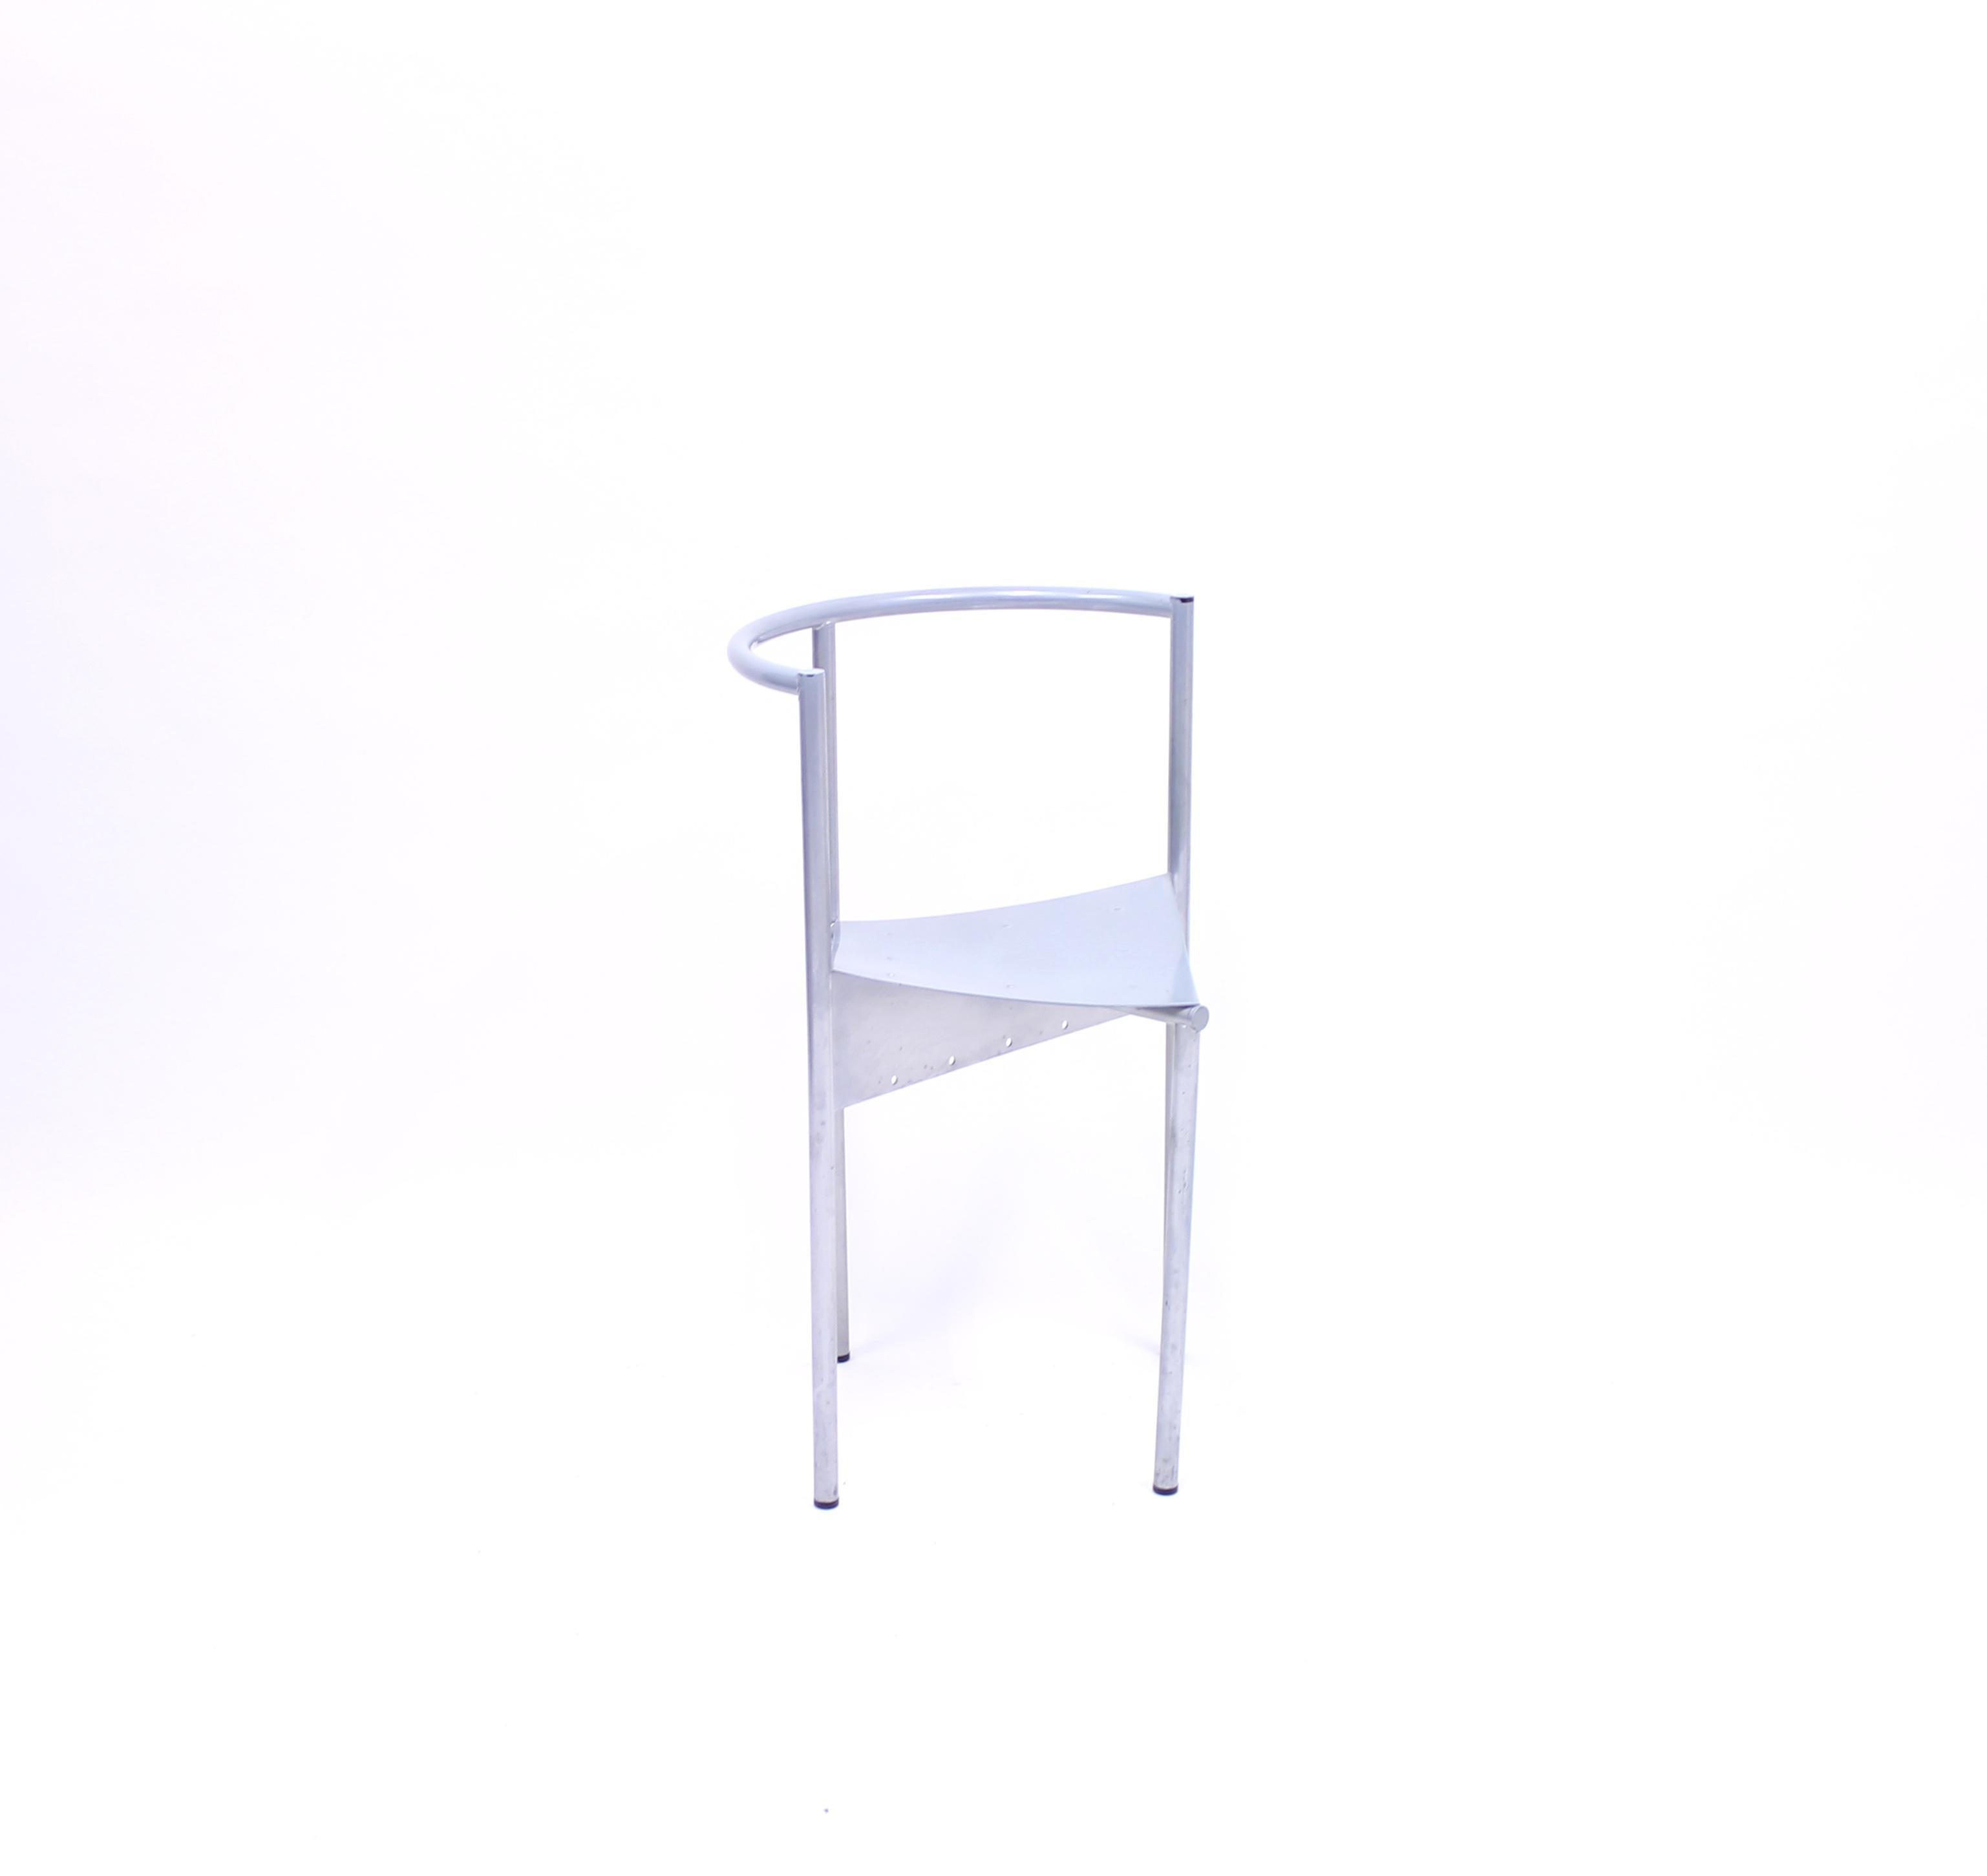 Post-Modern Philippe Starck, Wendy Wright Chair, Disform, 1986